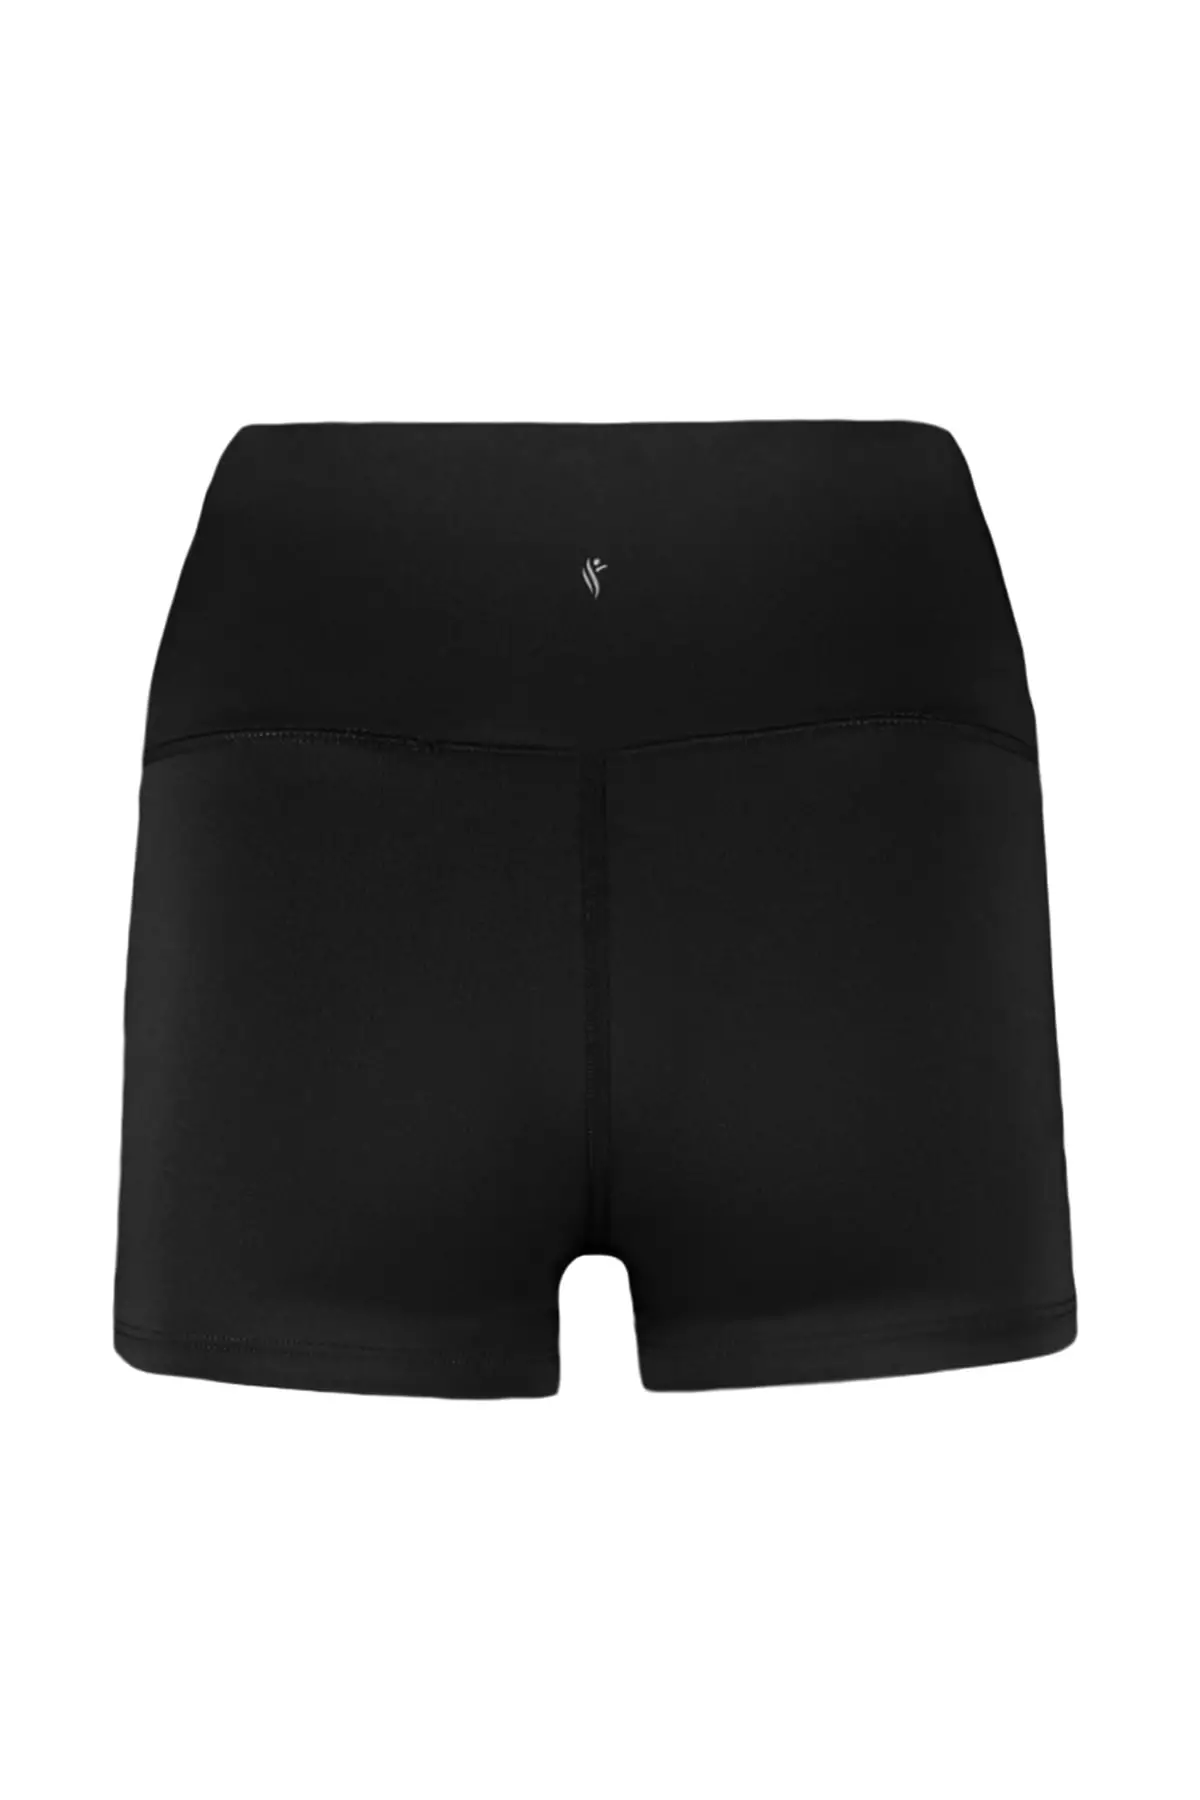 Under Armour Women's HeatGear® Shorts - Trendyol